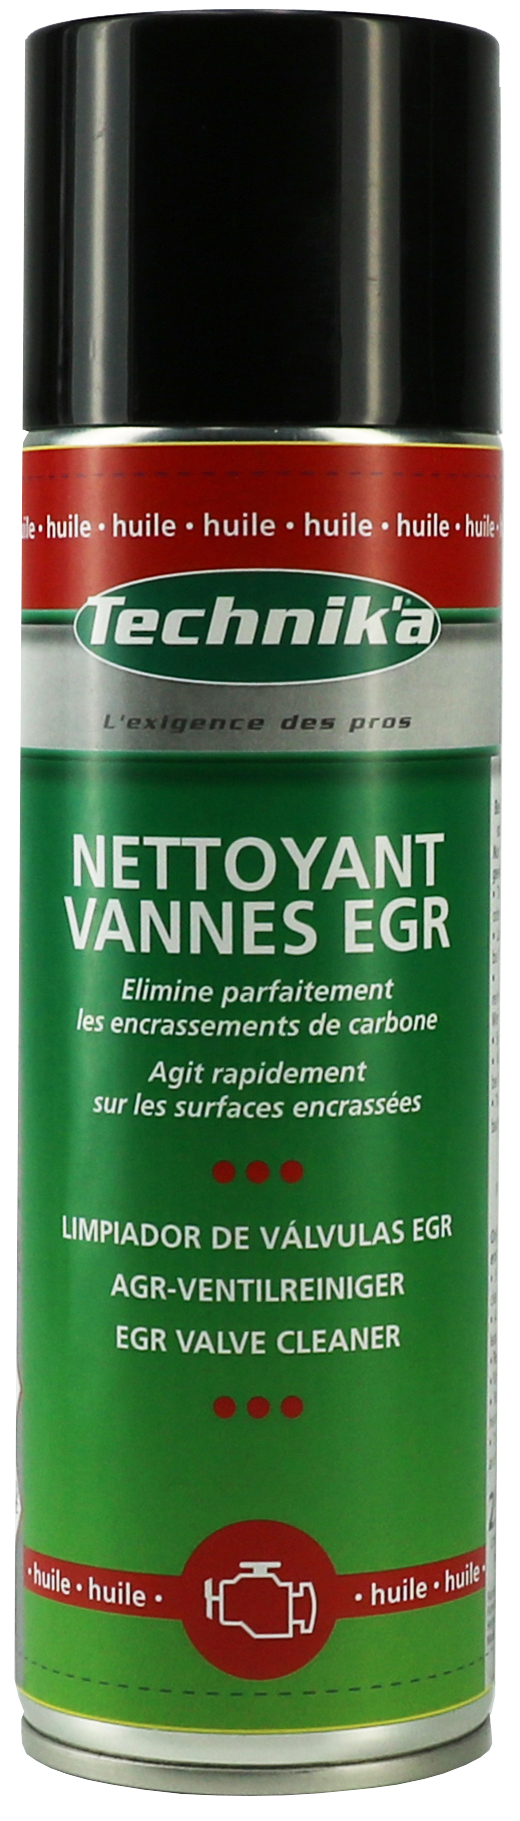 Additifs huile - Nettoyant vannes EGR Technik'a 860102